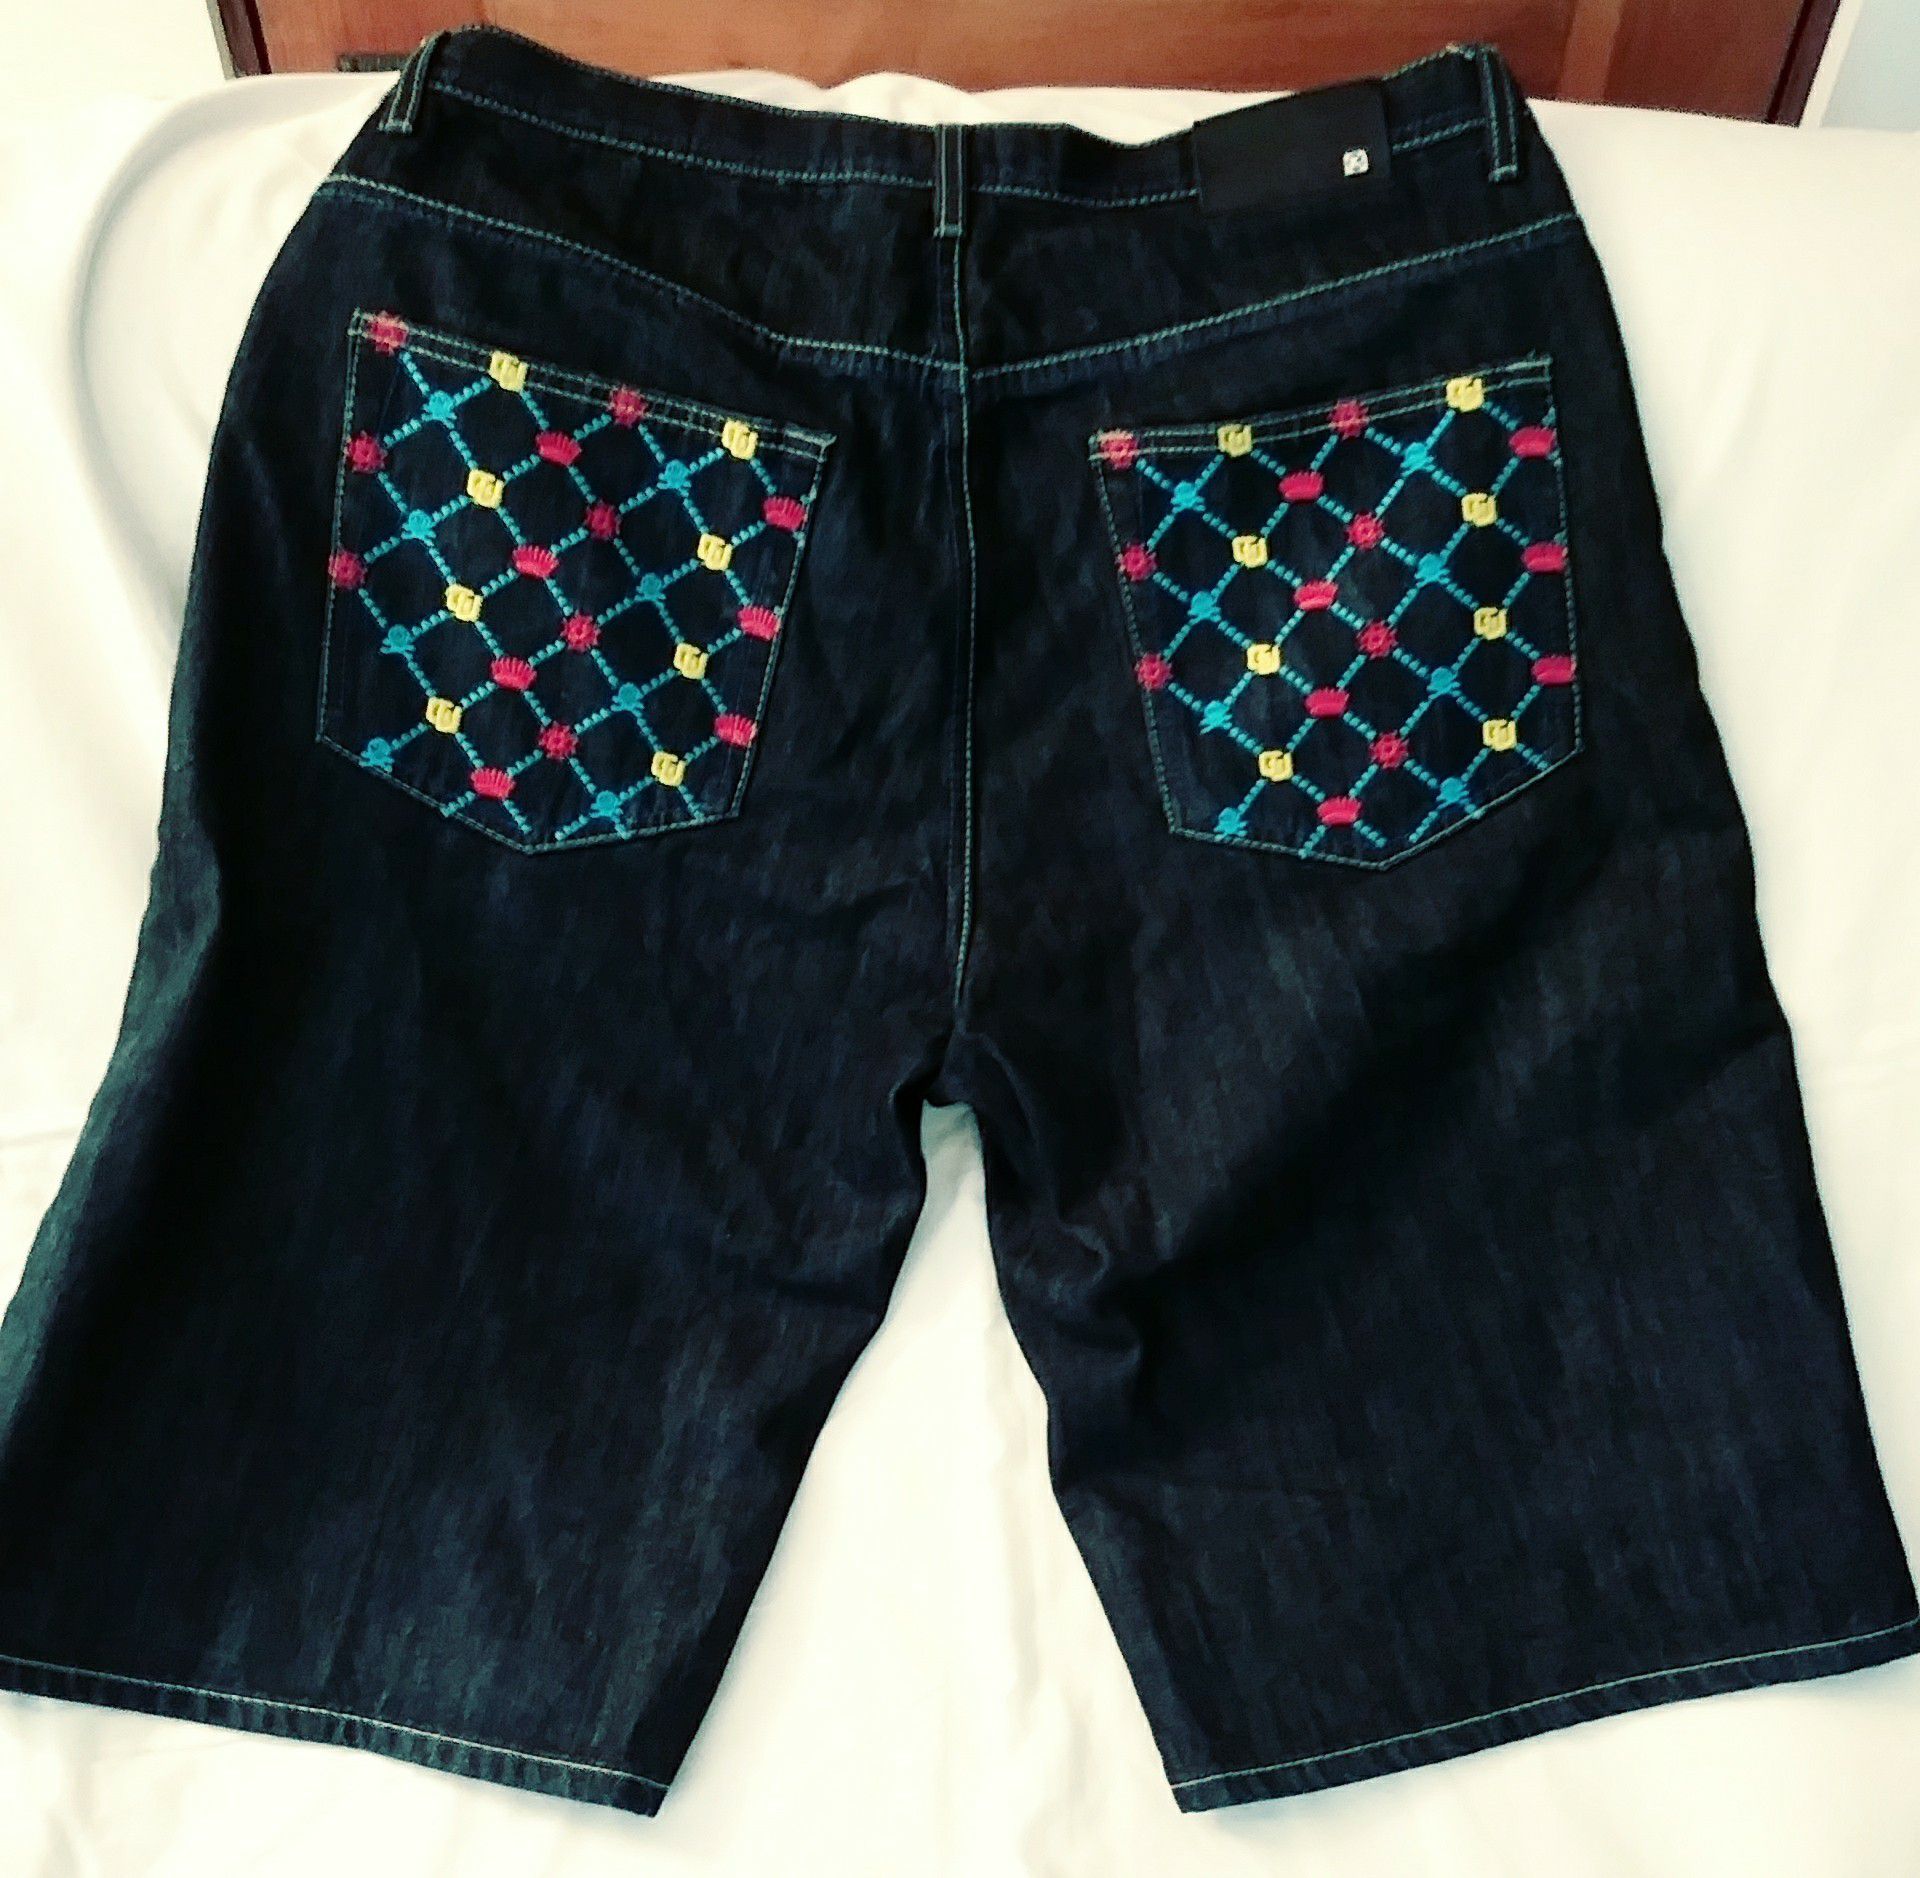 Men's denim shorts. G-Unit clothing company. Size 36W x 15L